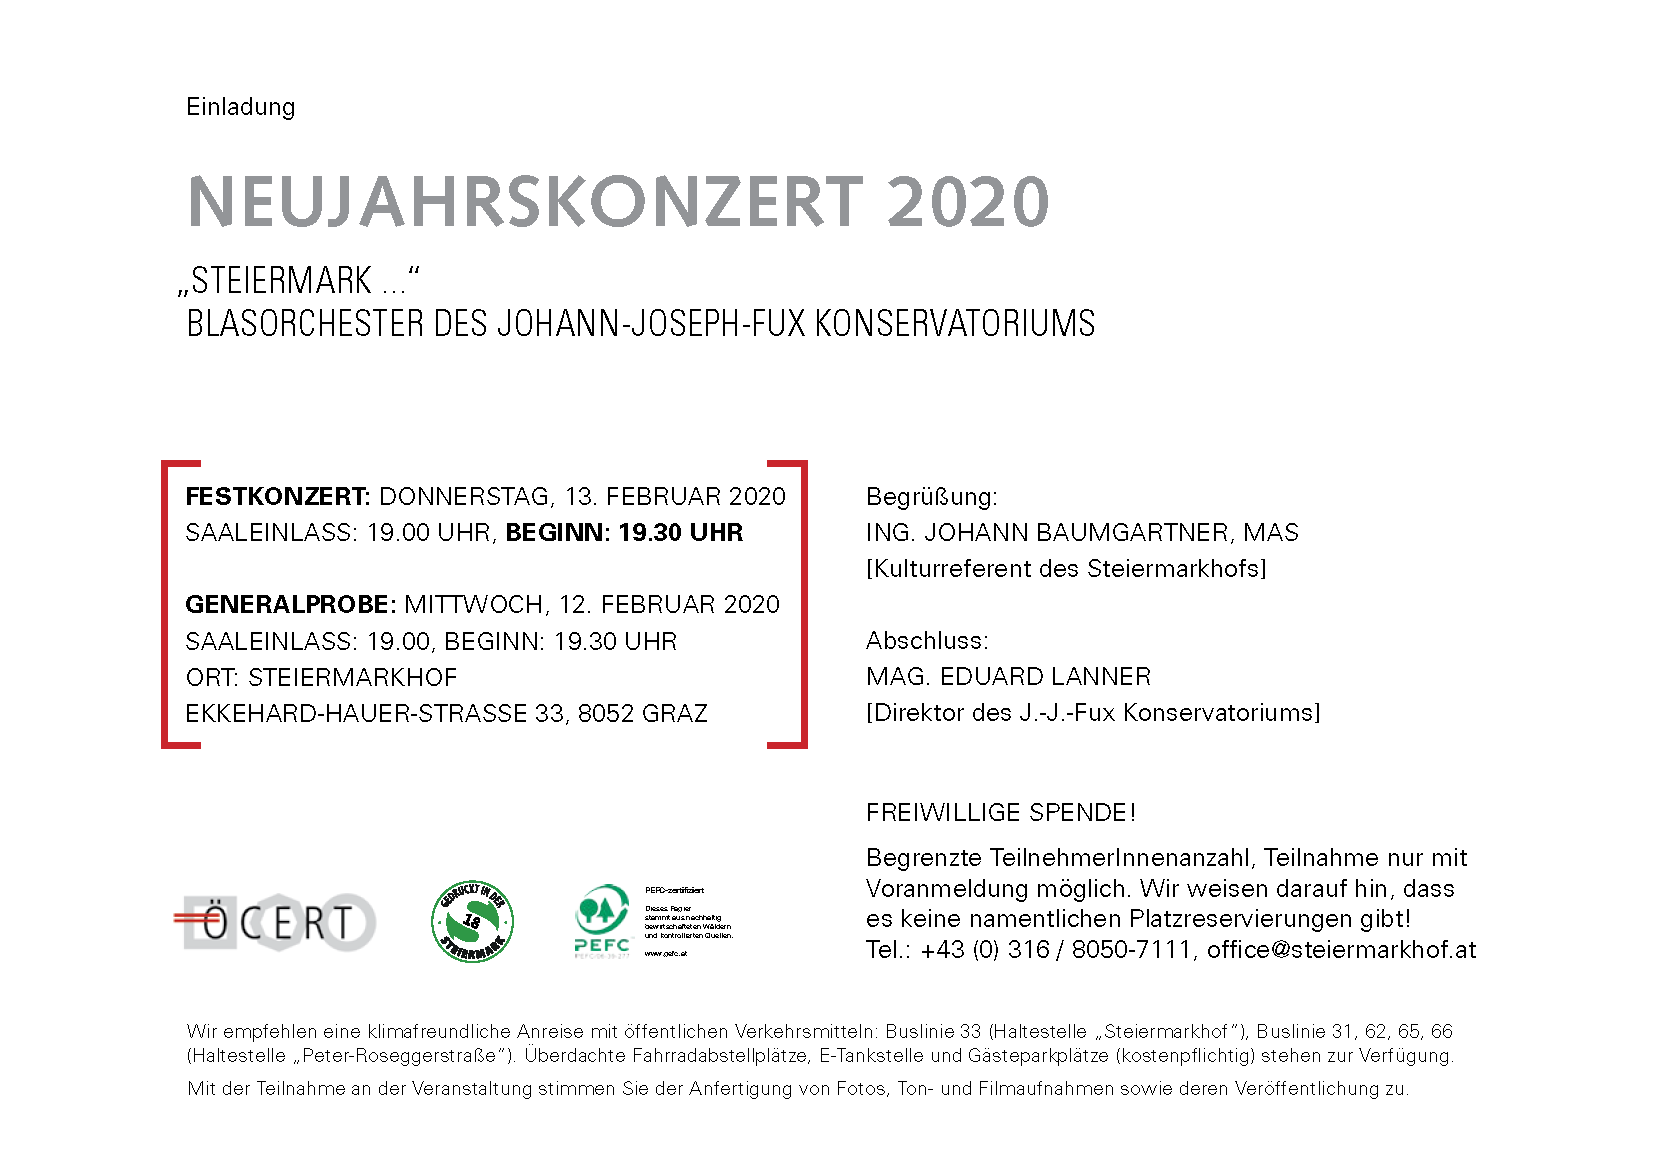 Neujahrskonzert - "Steiermark..."  - am 13. Februar 2020